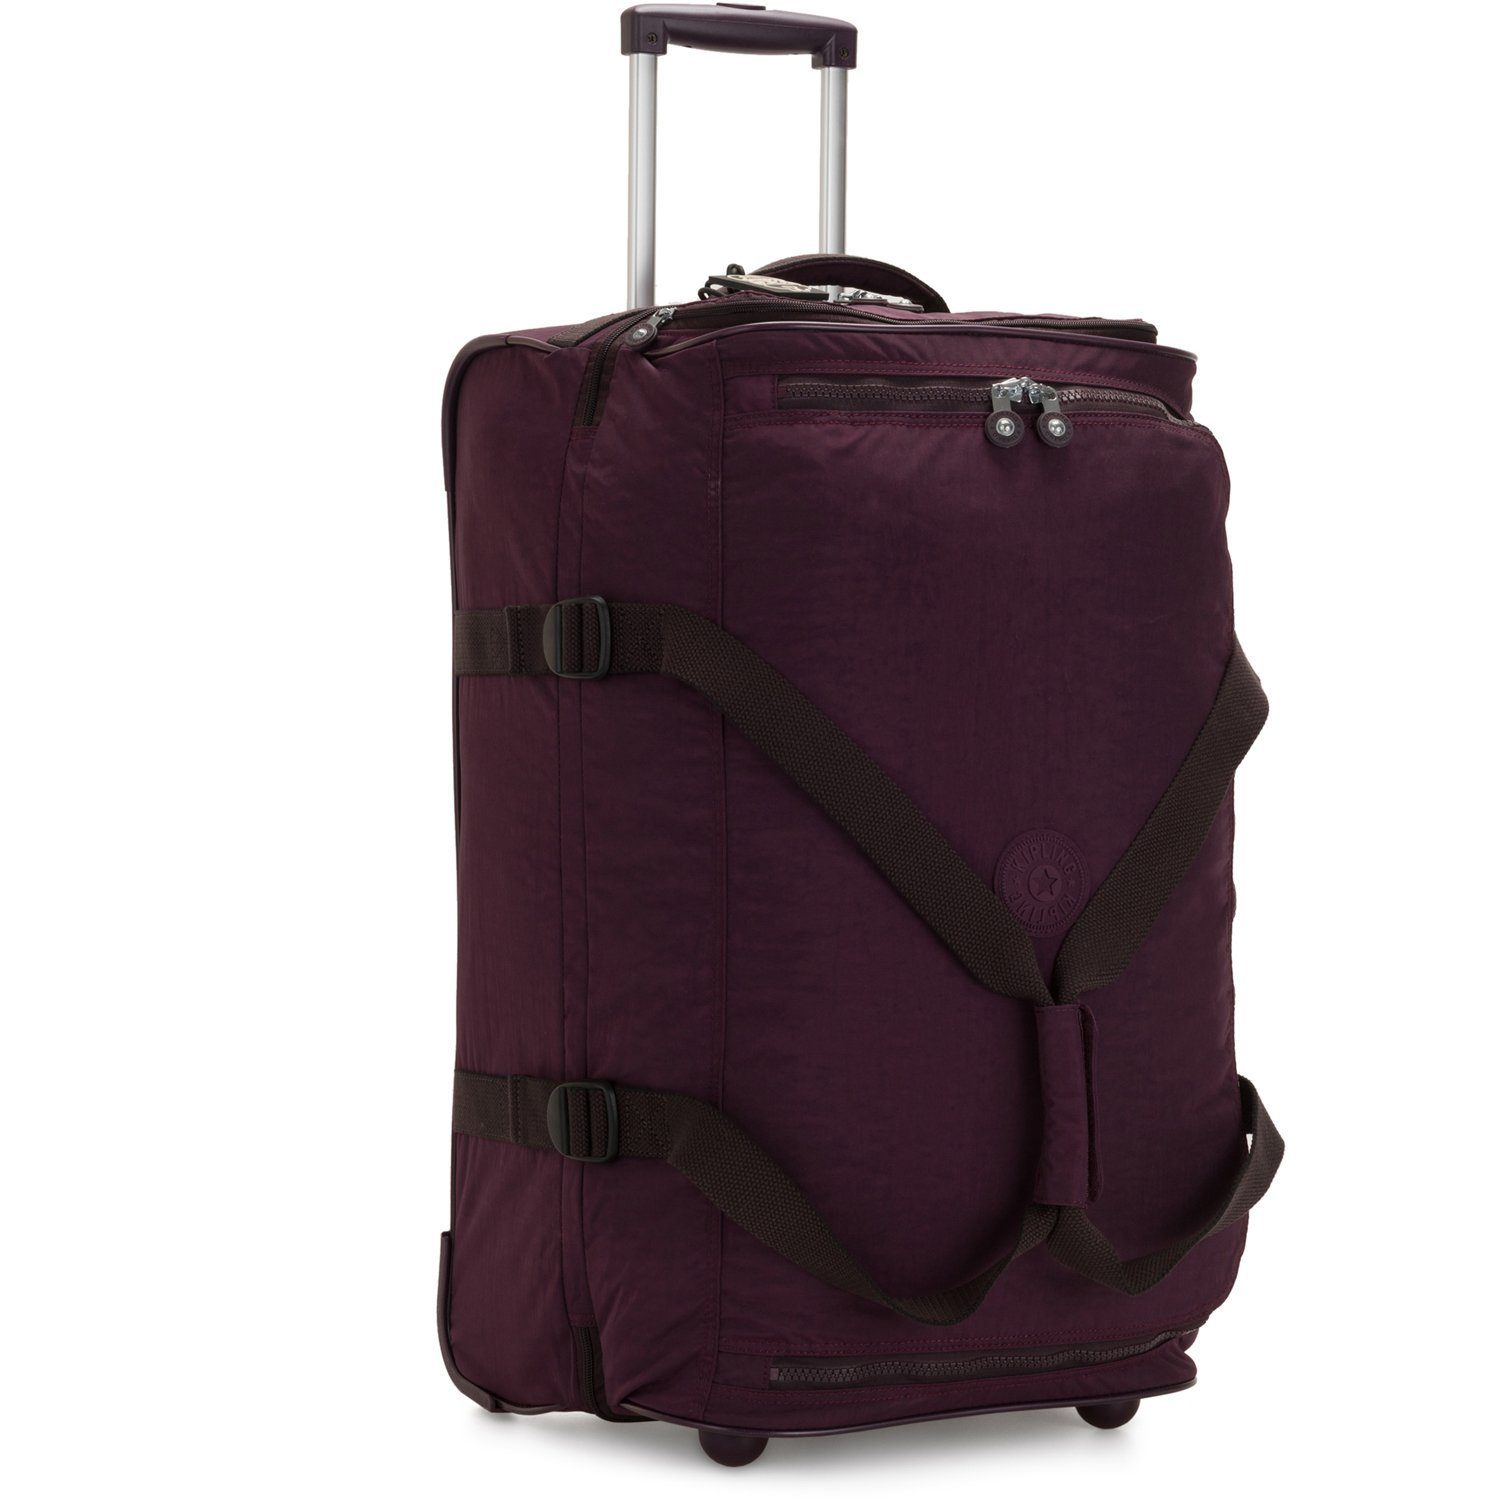 KIPLING Reisetasche »Basic Travel«, Nylon kaufen | OTTO